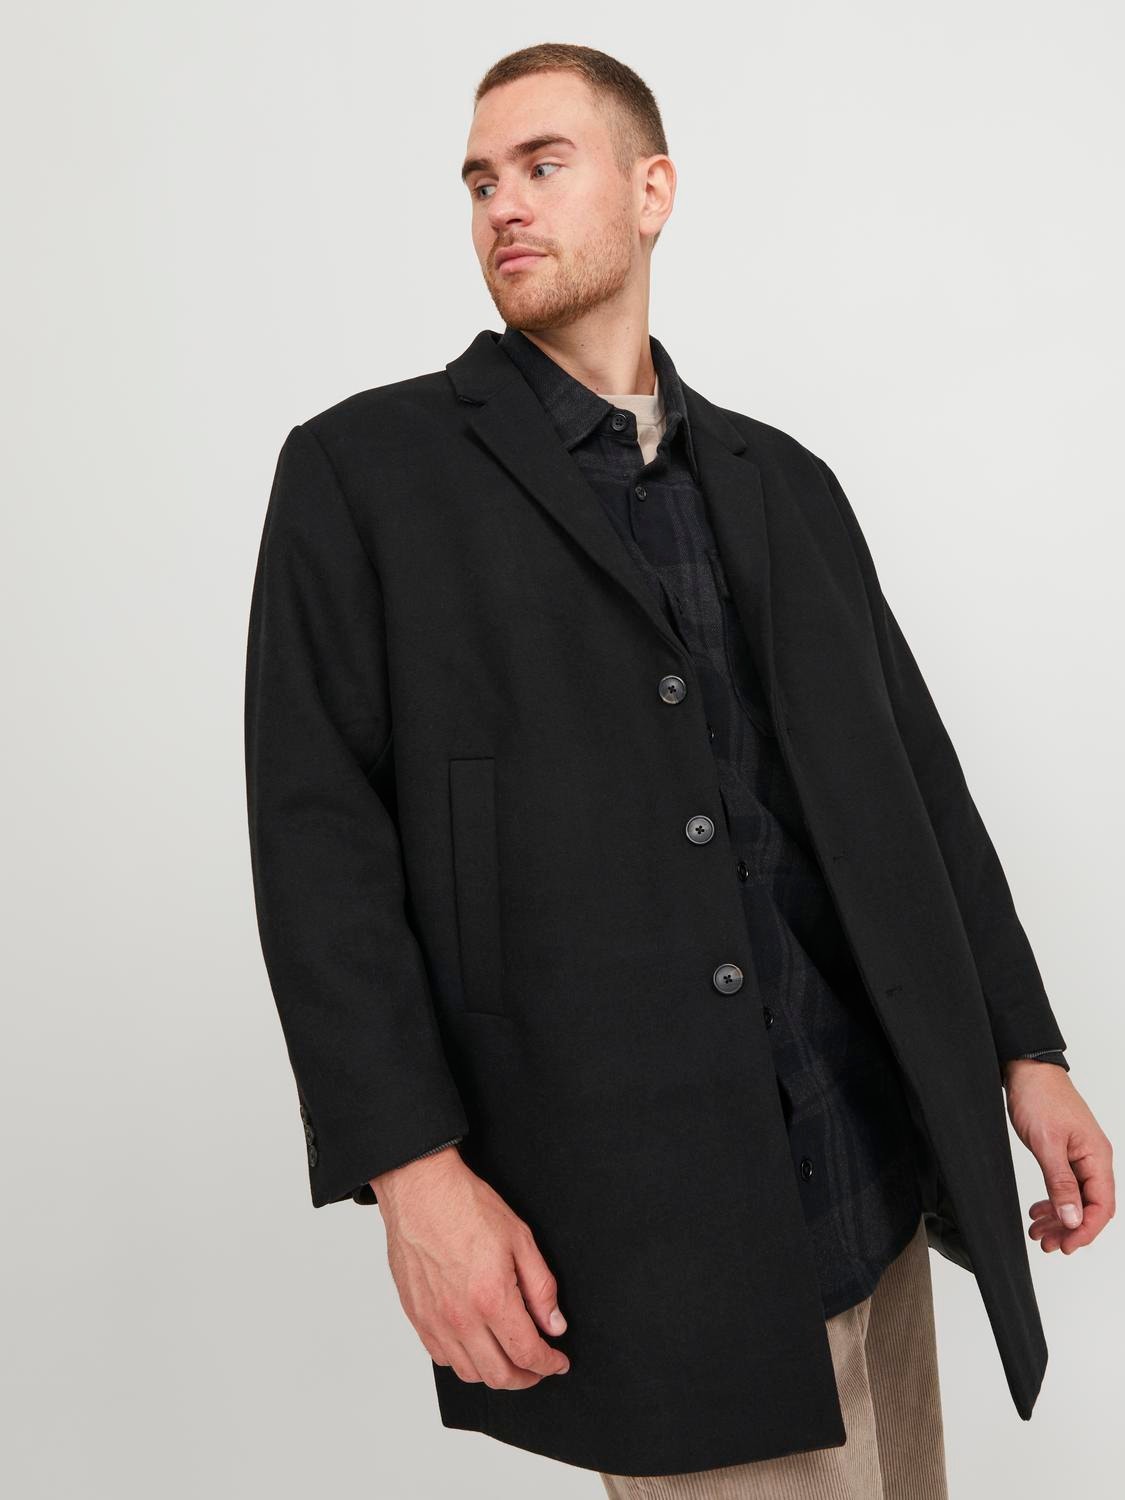 Jack & Jones Plus Size Coat -Black - 12246237